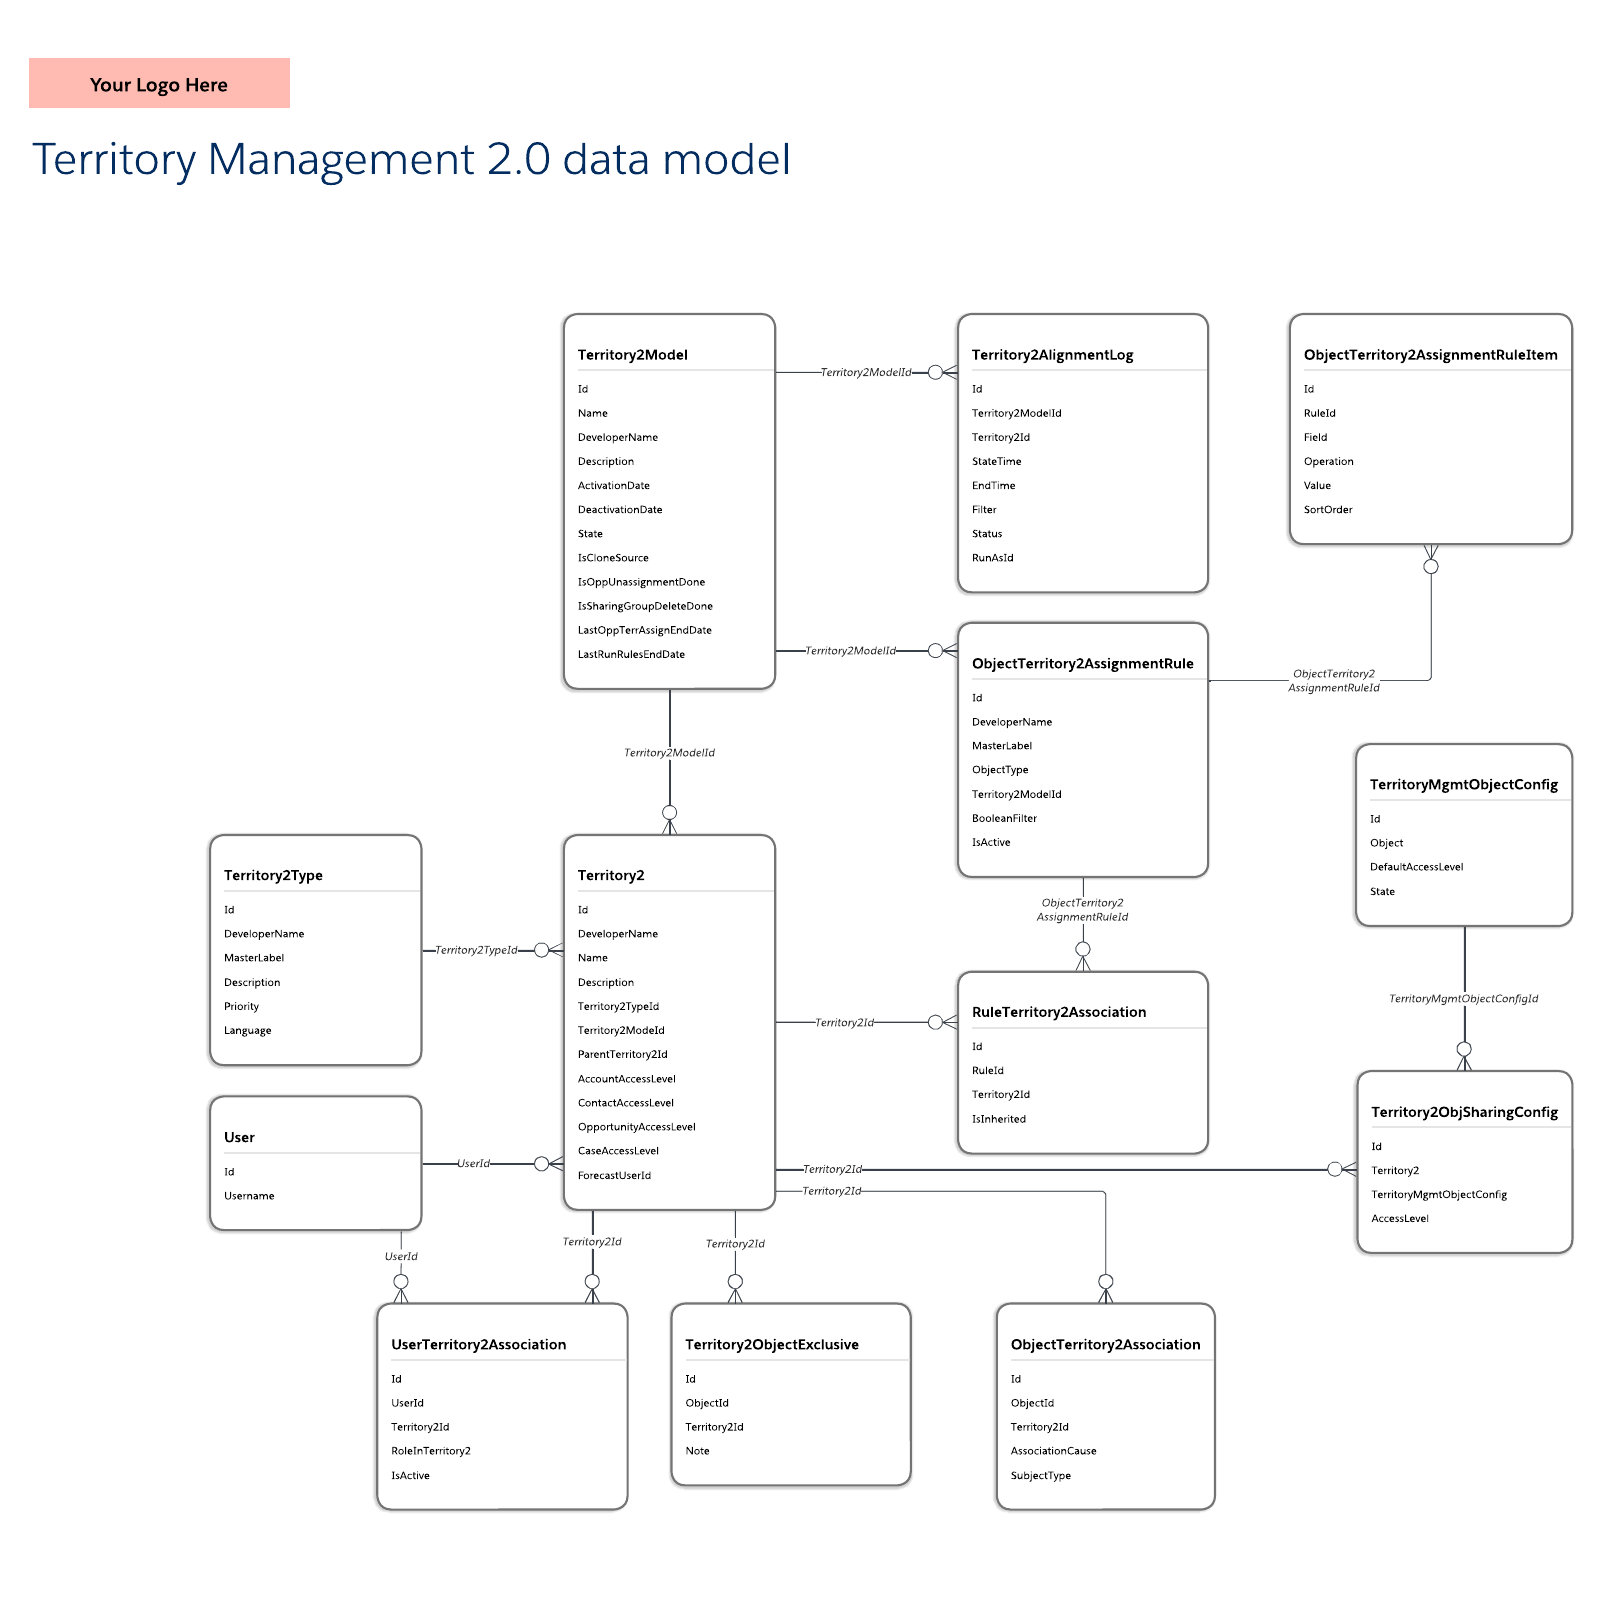 Territory Management 2.0 data model example